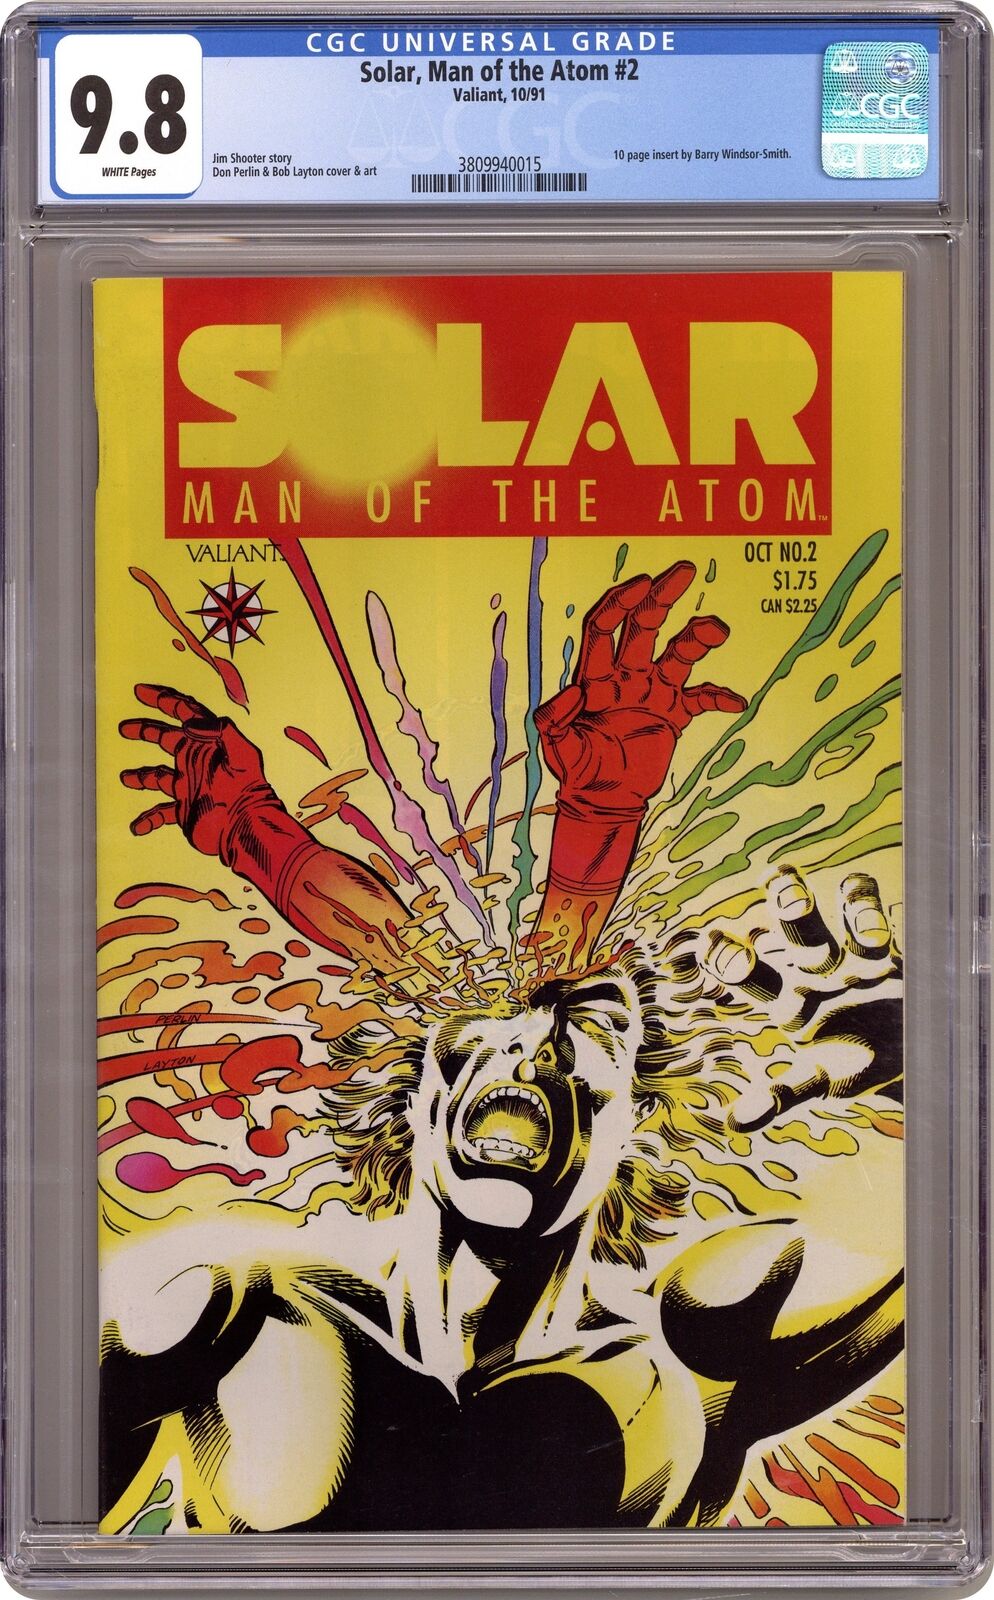 Solar Man of the Atom #2 CGC 9.8 1991 3809940015